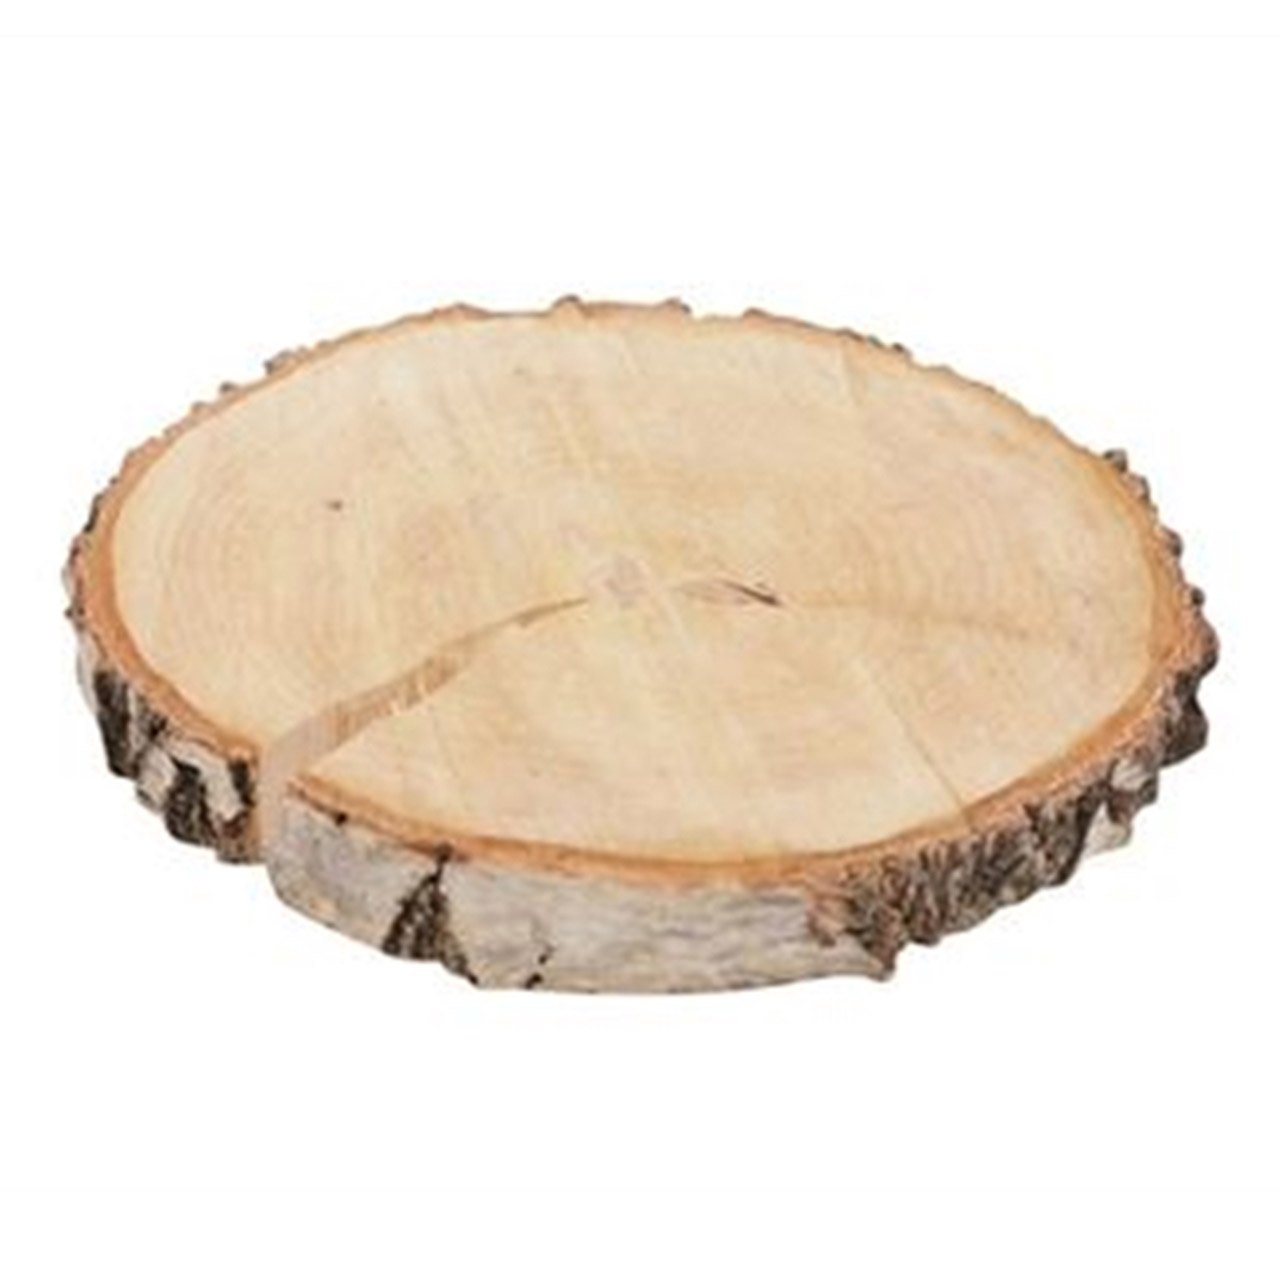 Birch slice made of real wood, natural Ø21cm